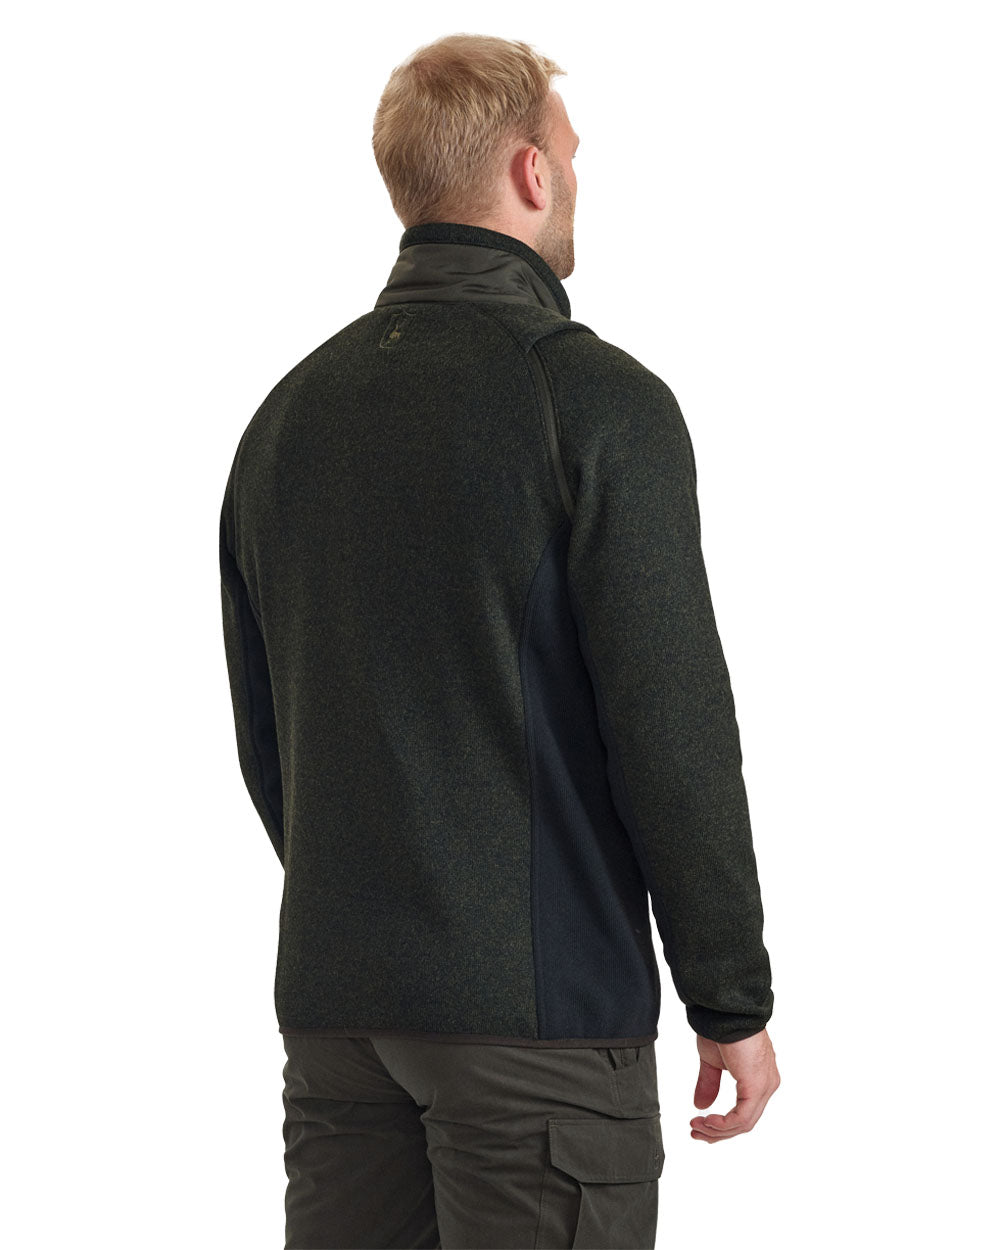 Timber coloured Deerhunter Moor Zip-off Jacket on White background 